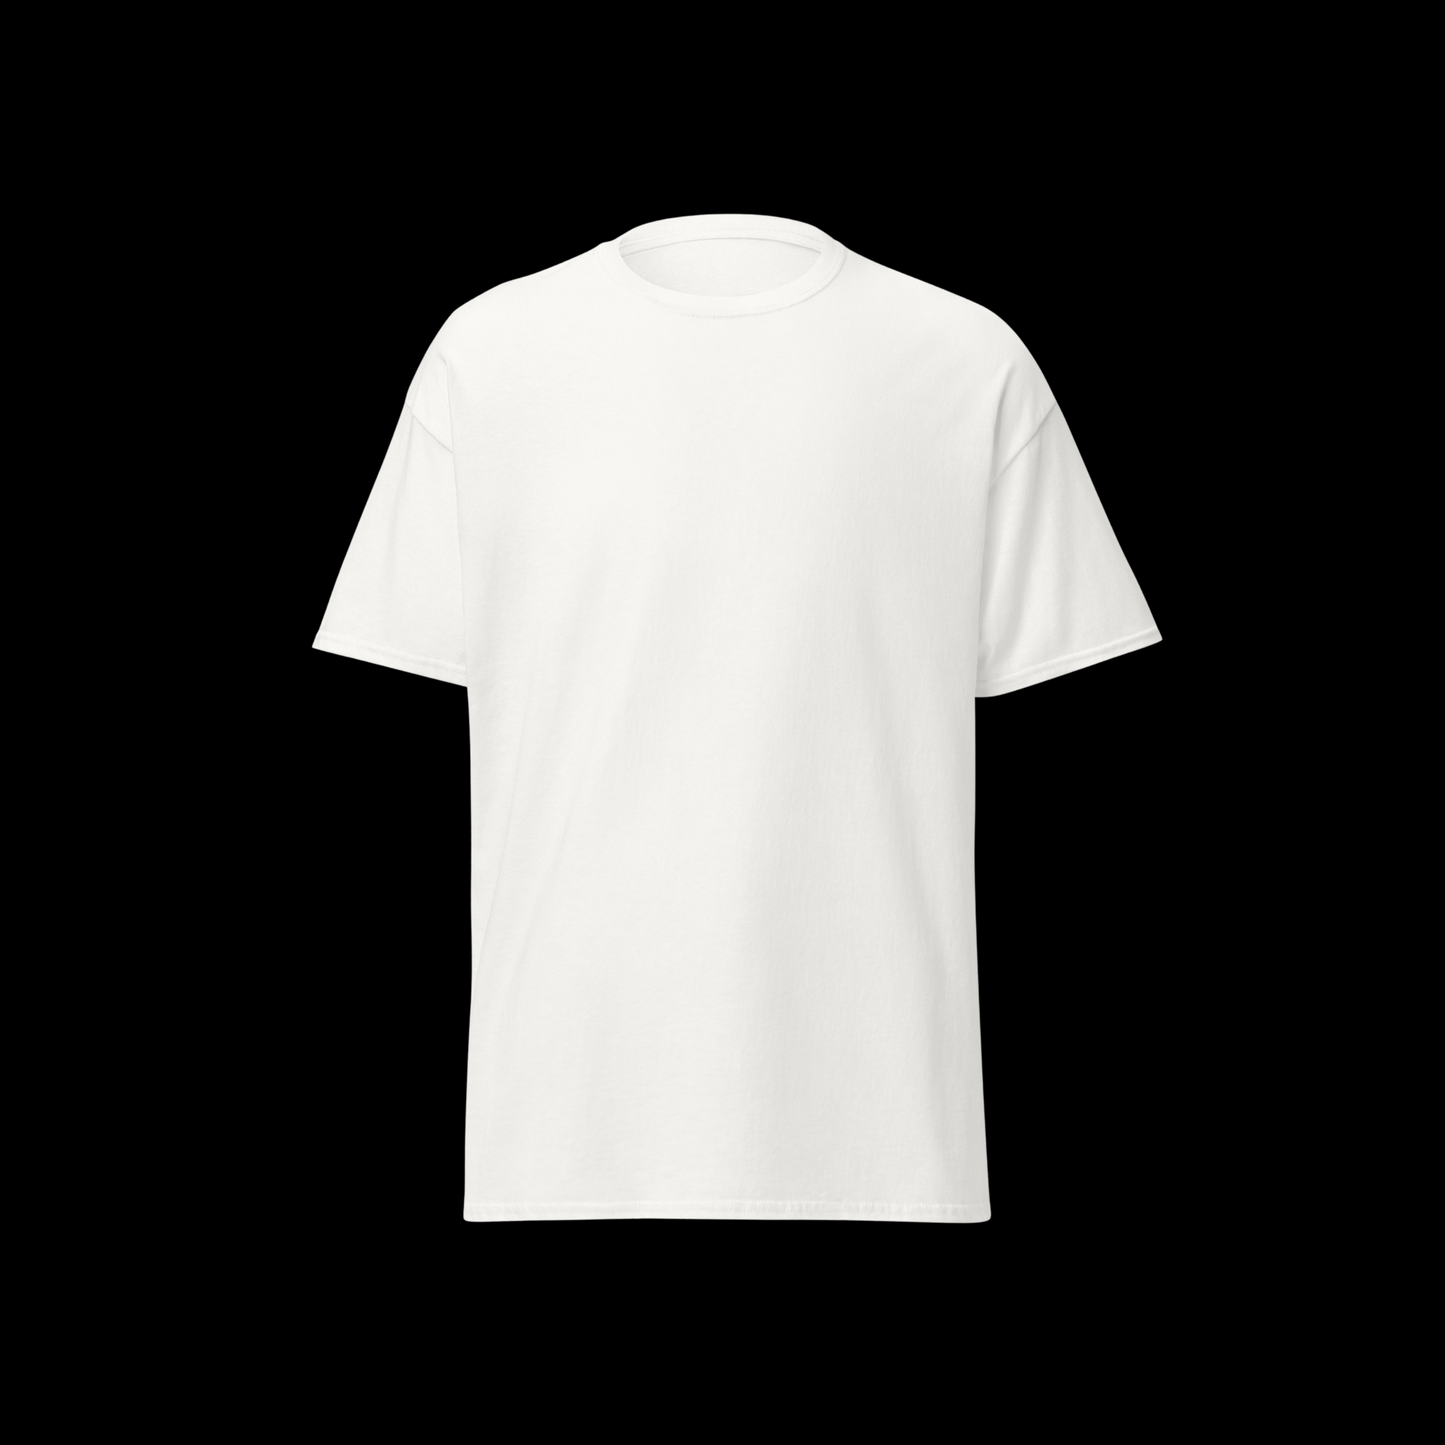 Camiseta black and White estilo 4